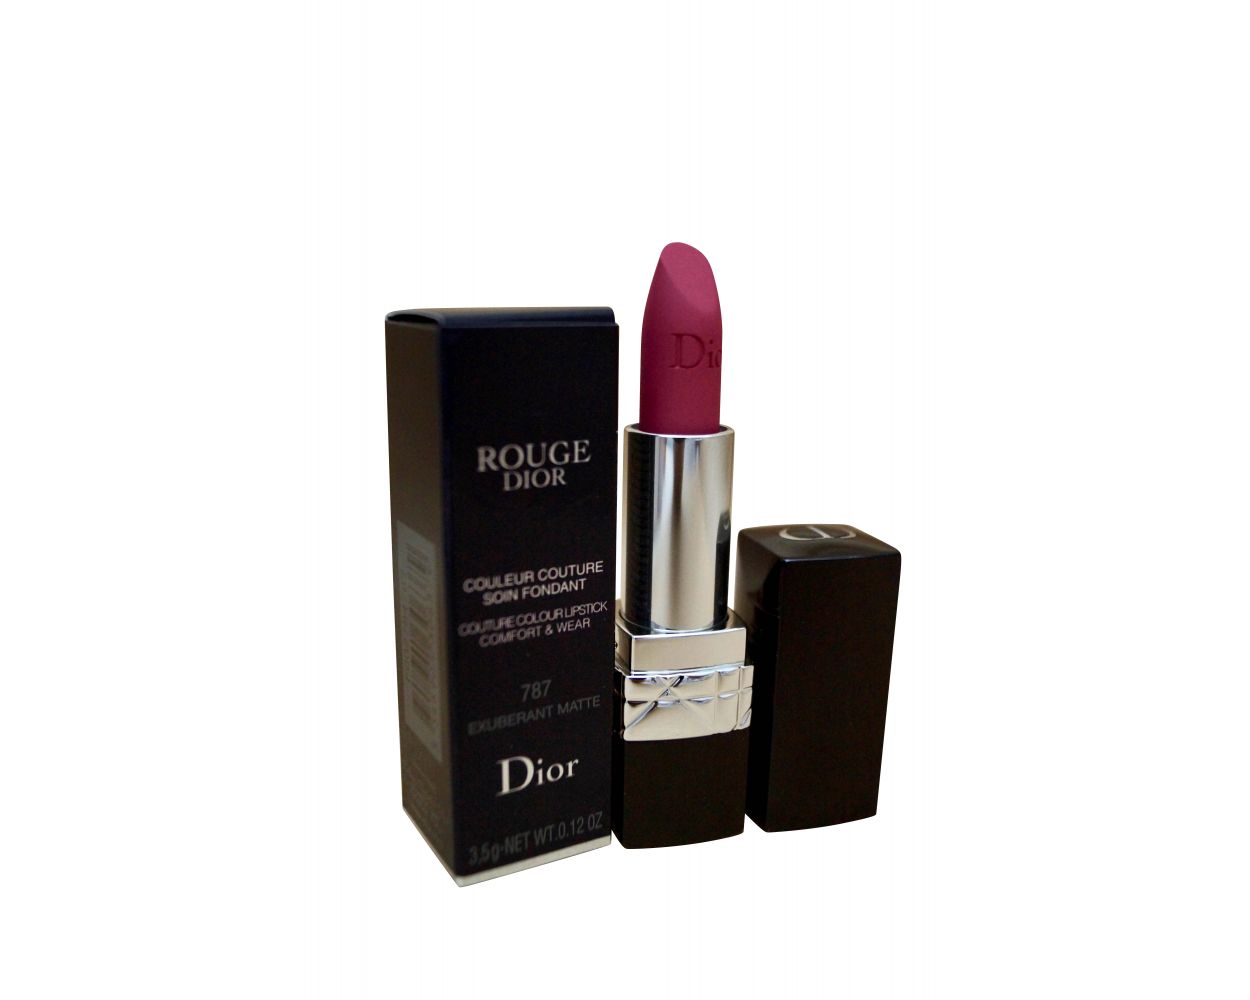 Dior Couture Color Lipstick 787 Exuberant Matte | Makeup - Beautyvice.com